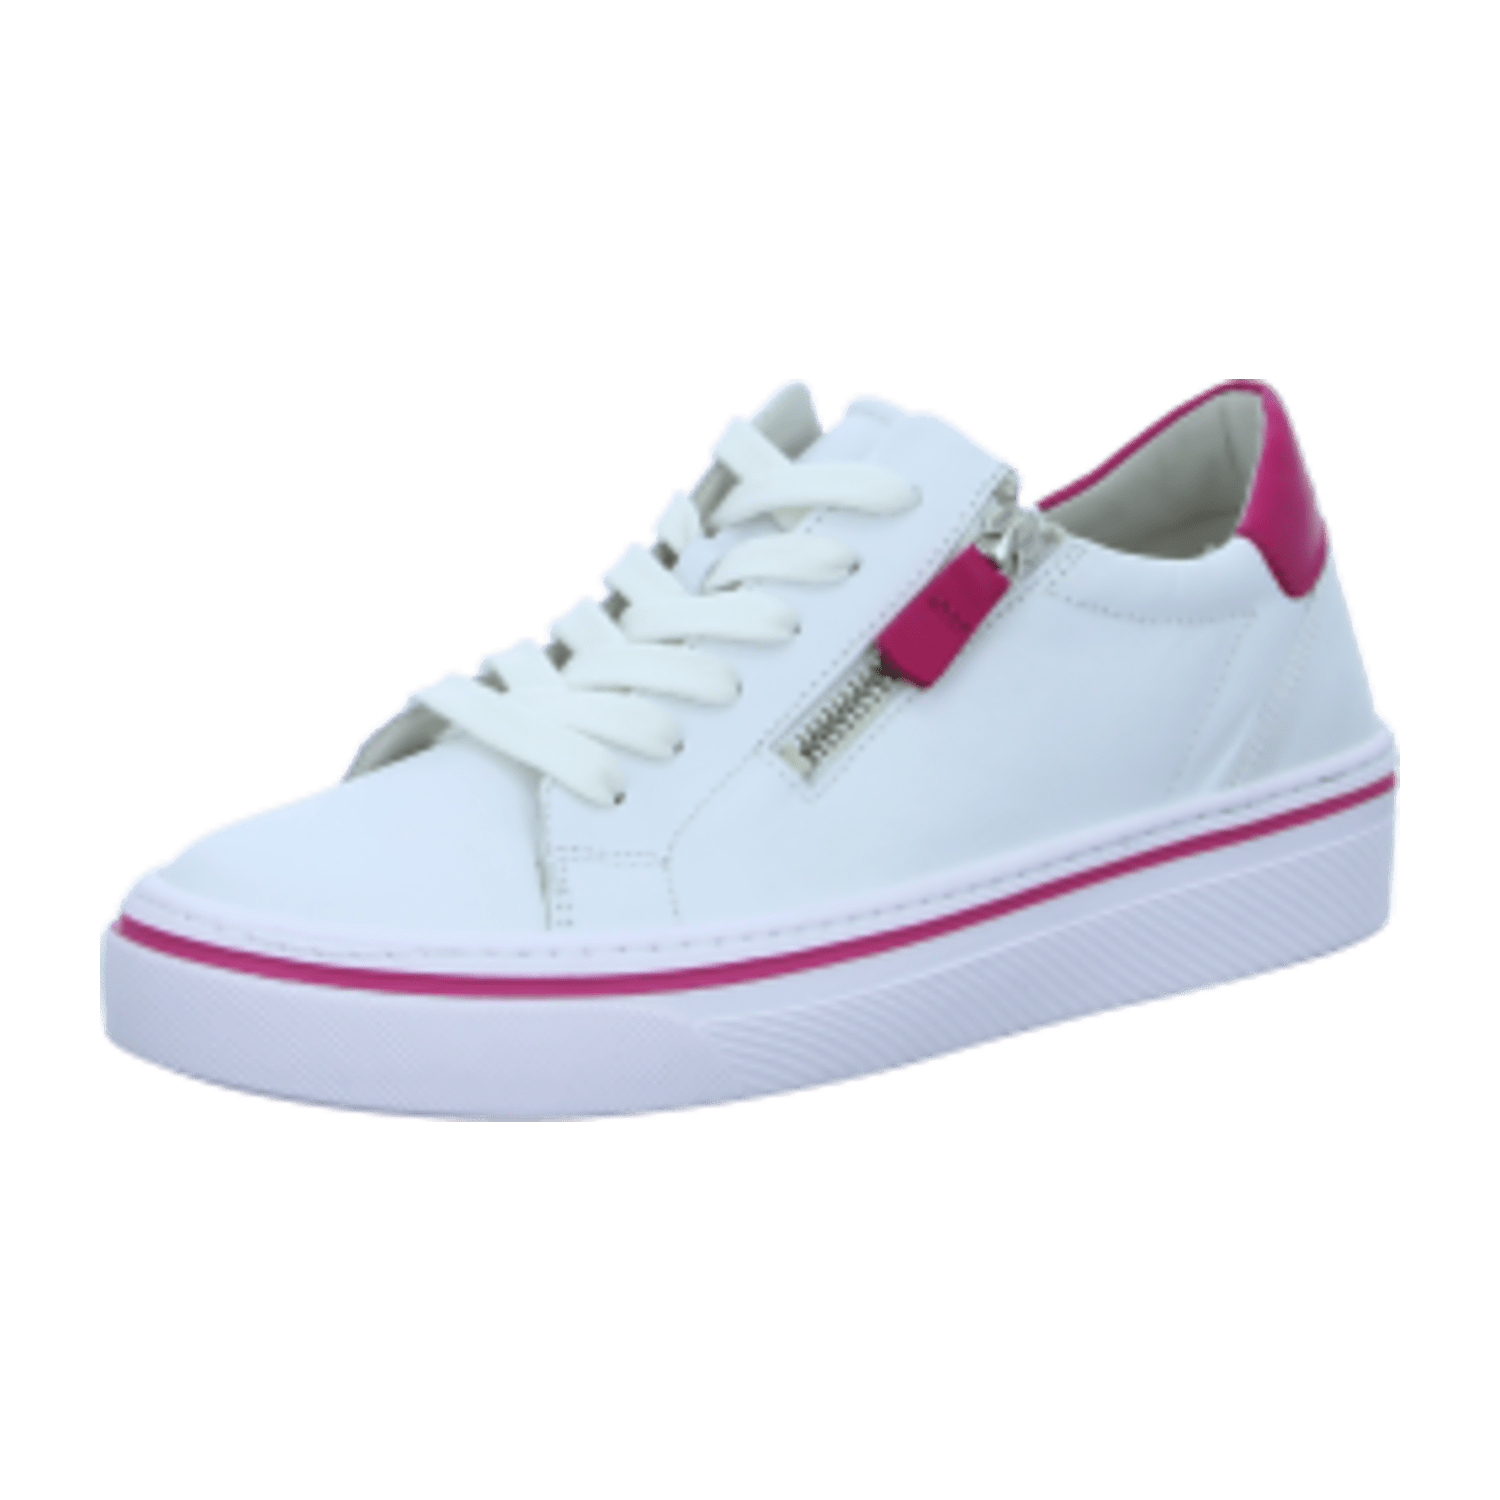 Gabor Best Fitting Schuhe Sneakers weiß pink 43.264.20